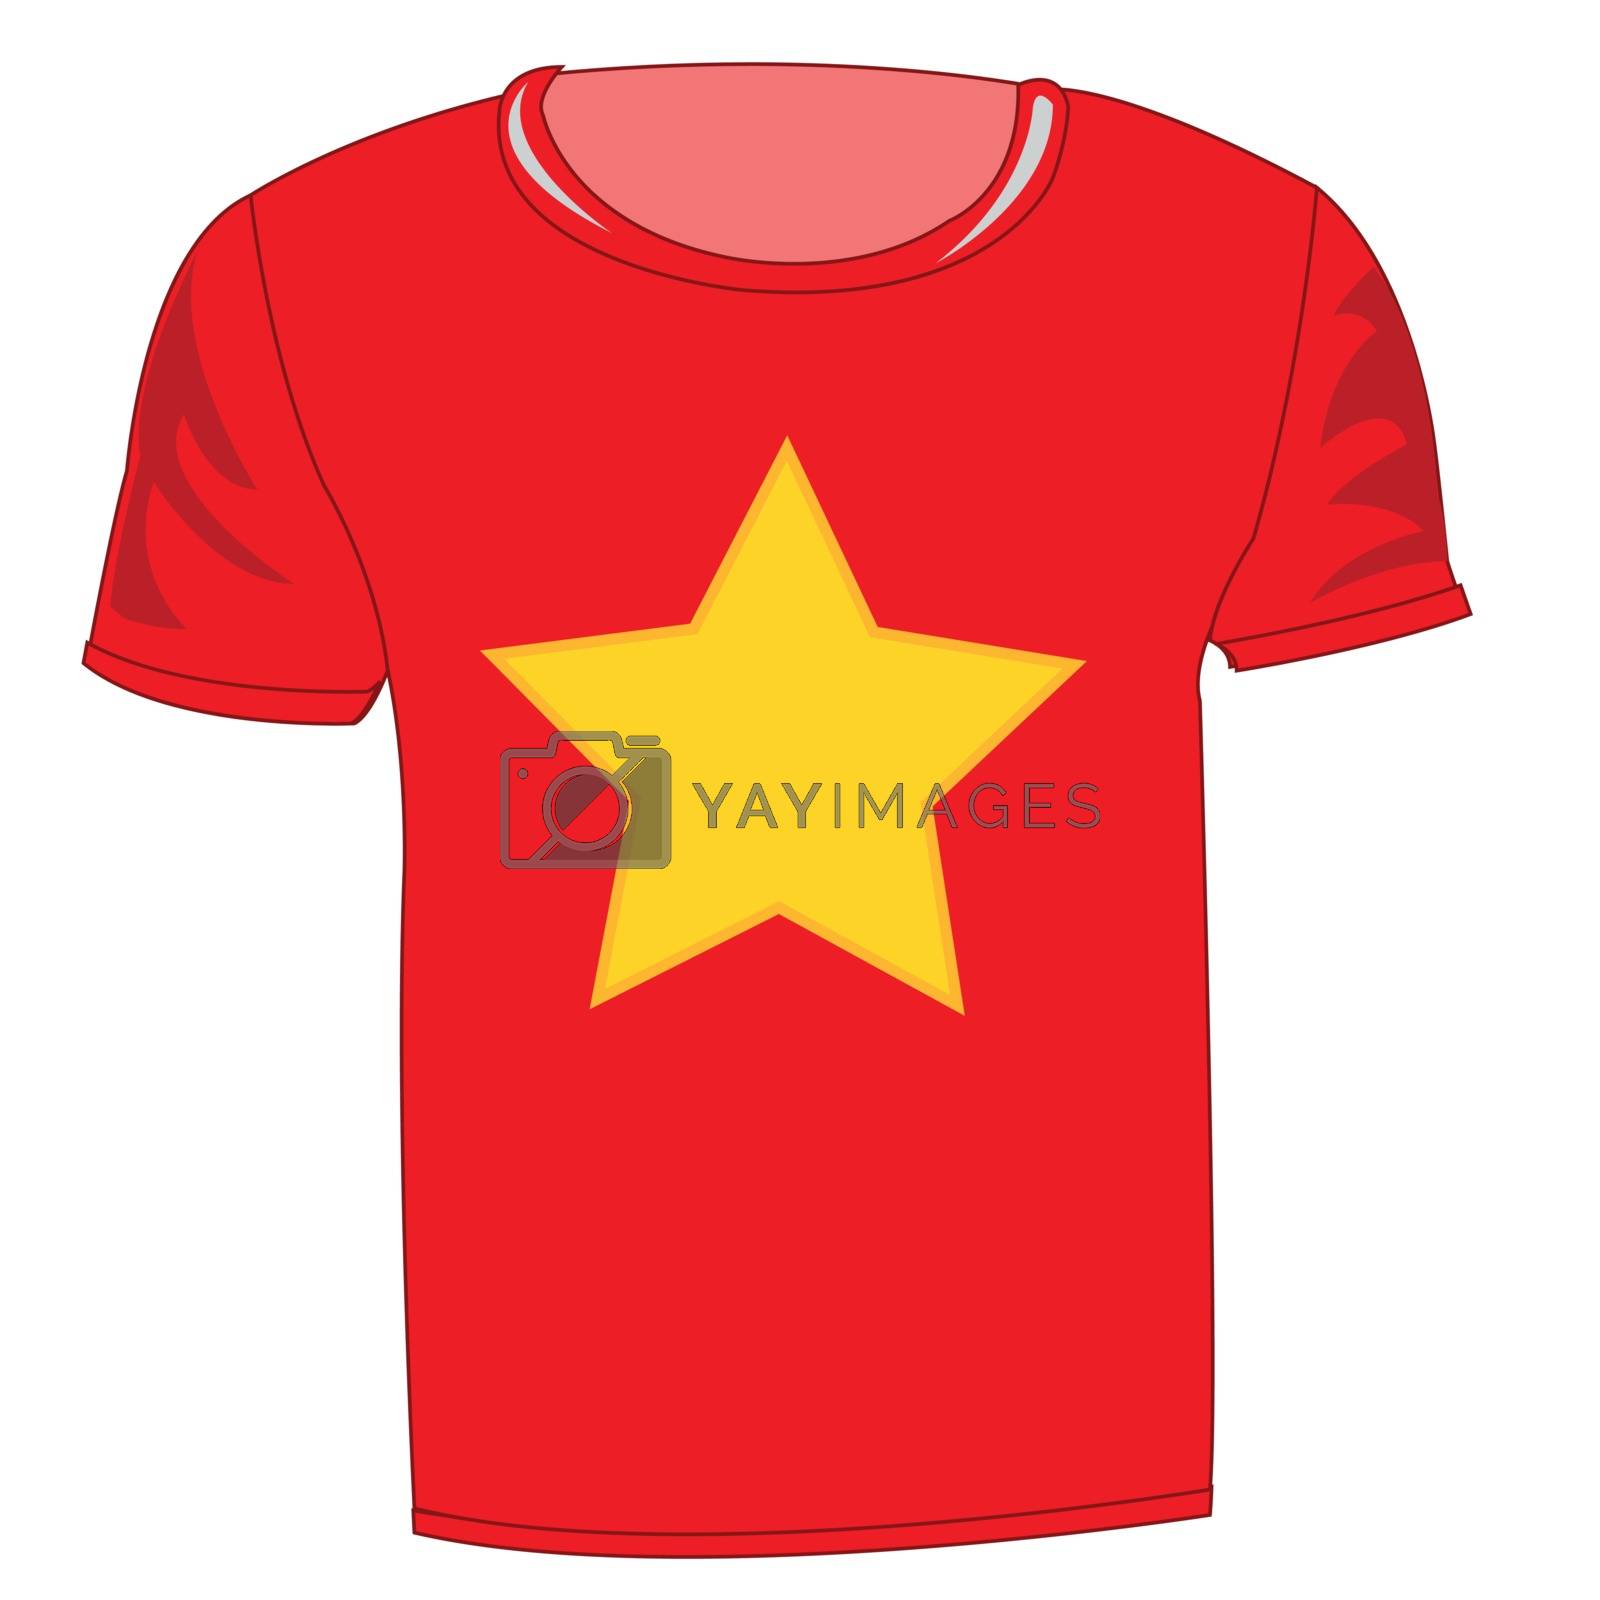 Royalty free image of T-shirt flag vietnam by cobol1964